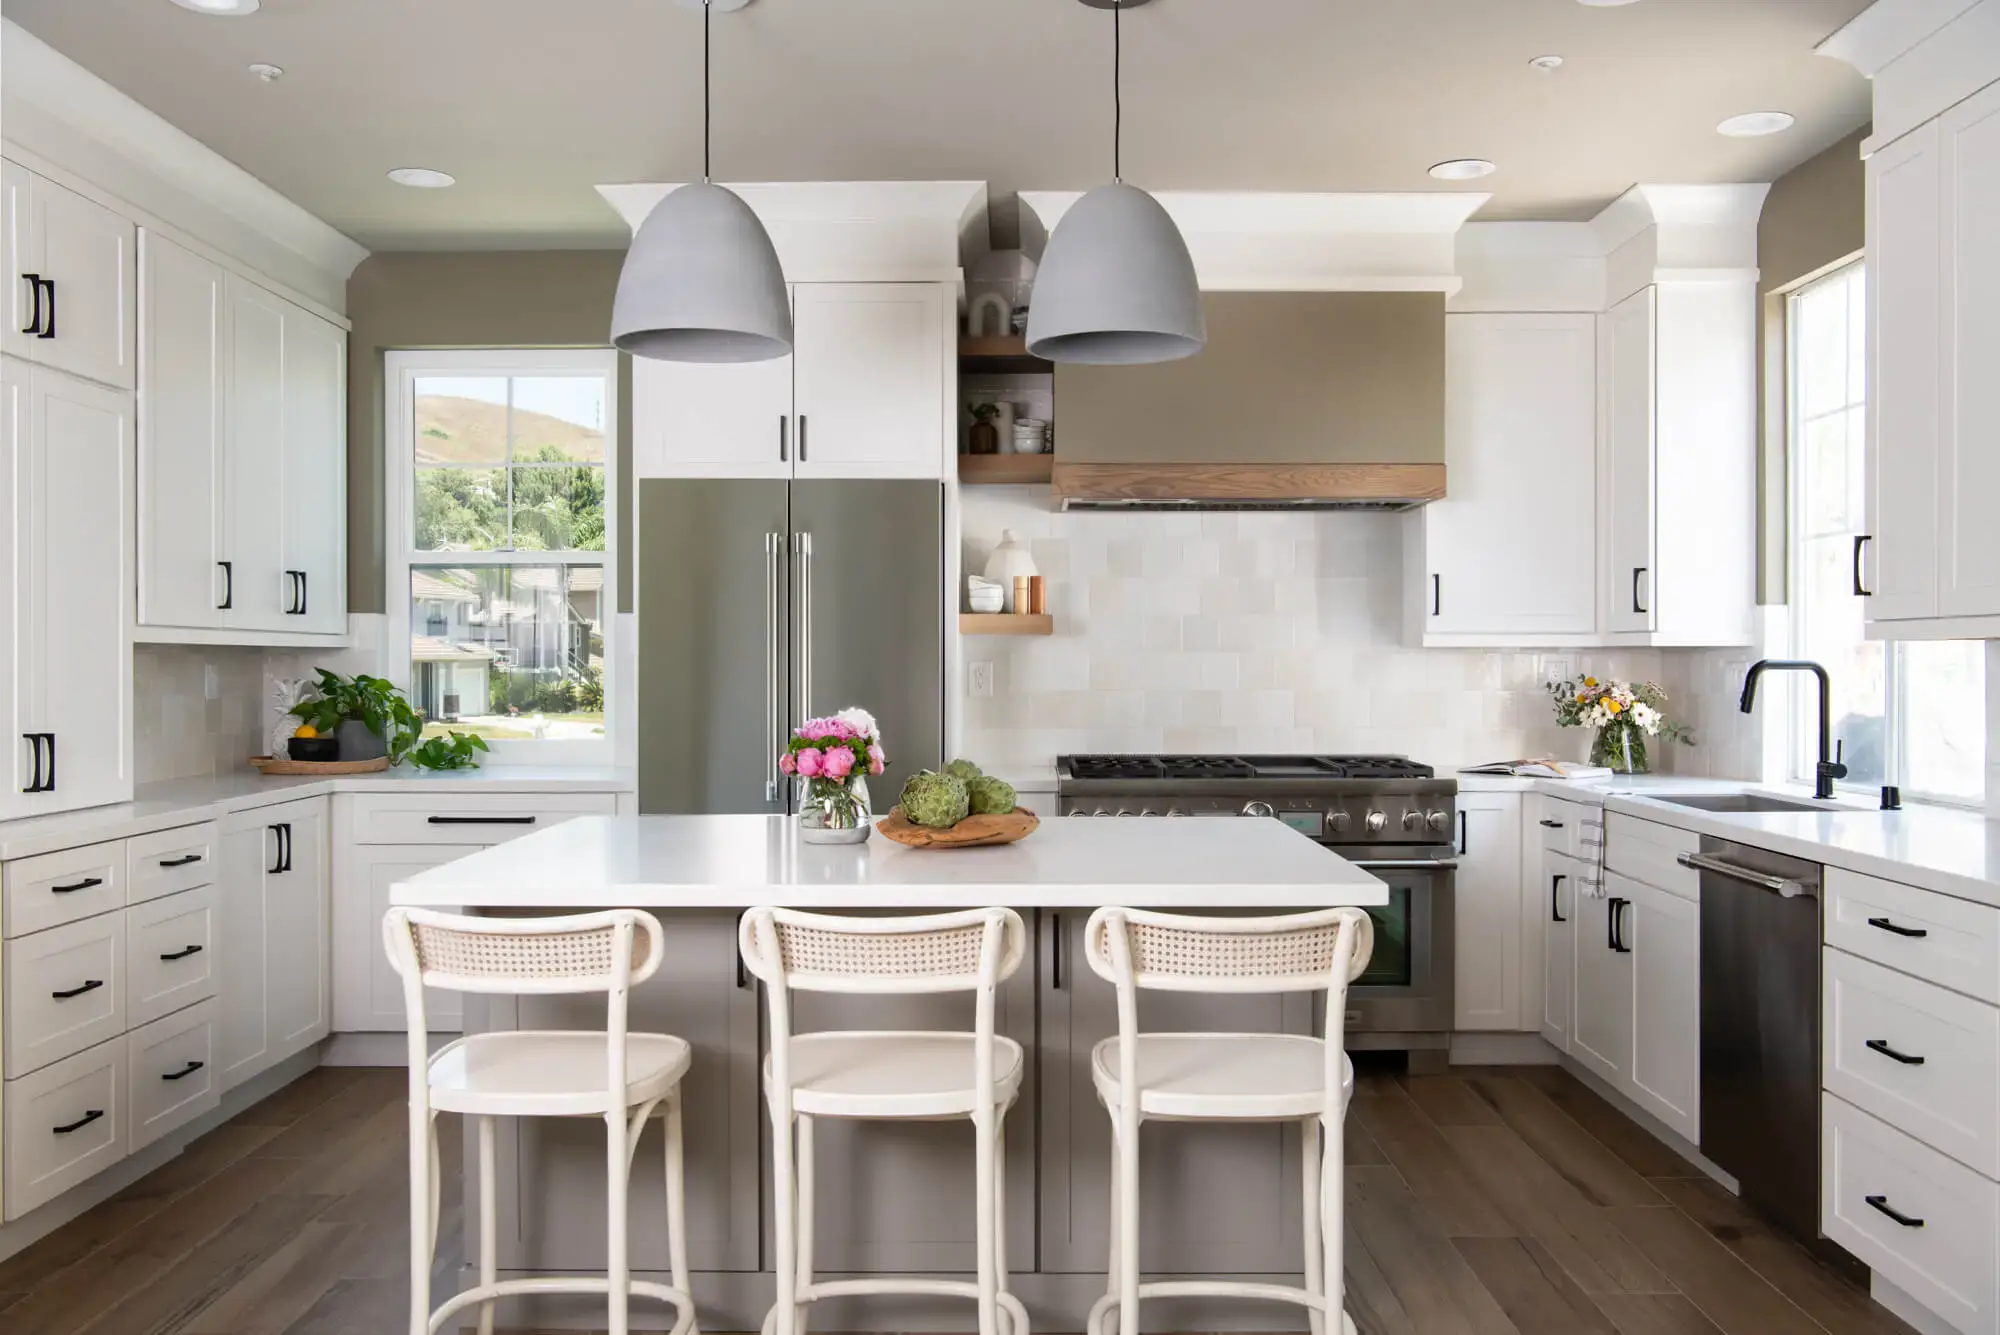 This San Clemente kitchen renovation features plenty of kitchen storage near the range zone